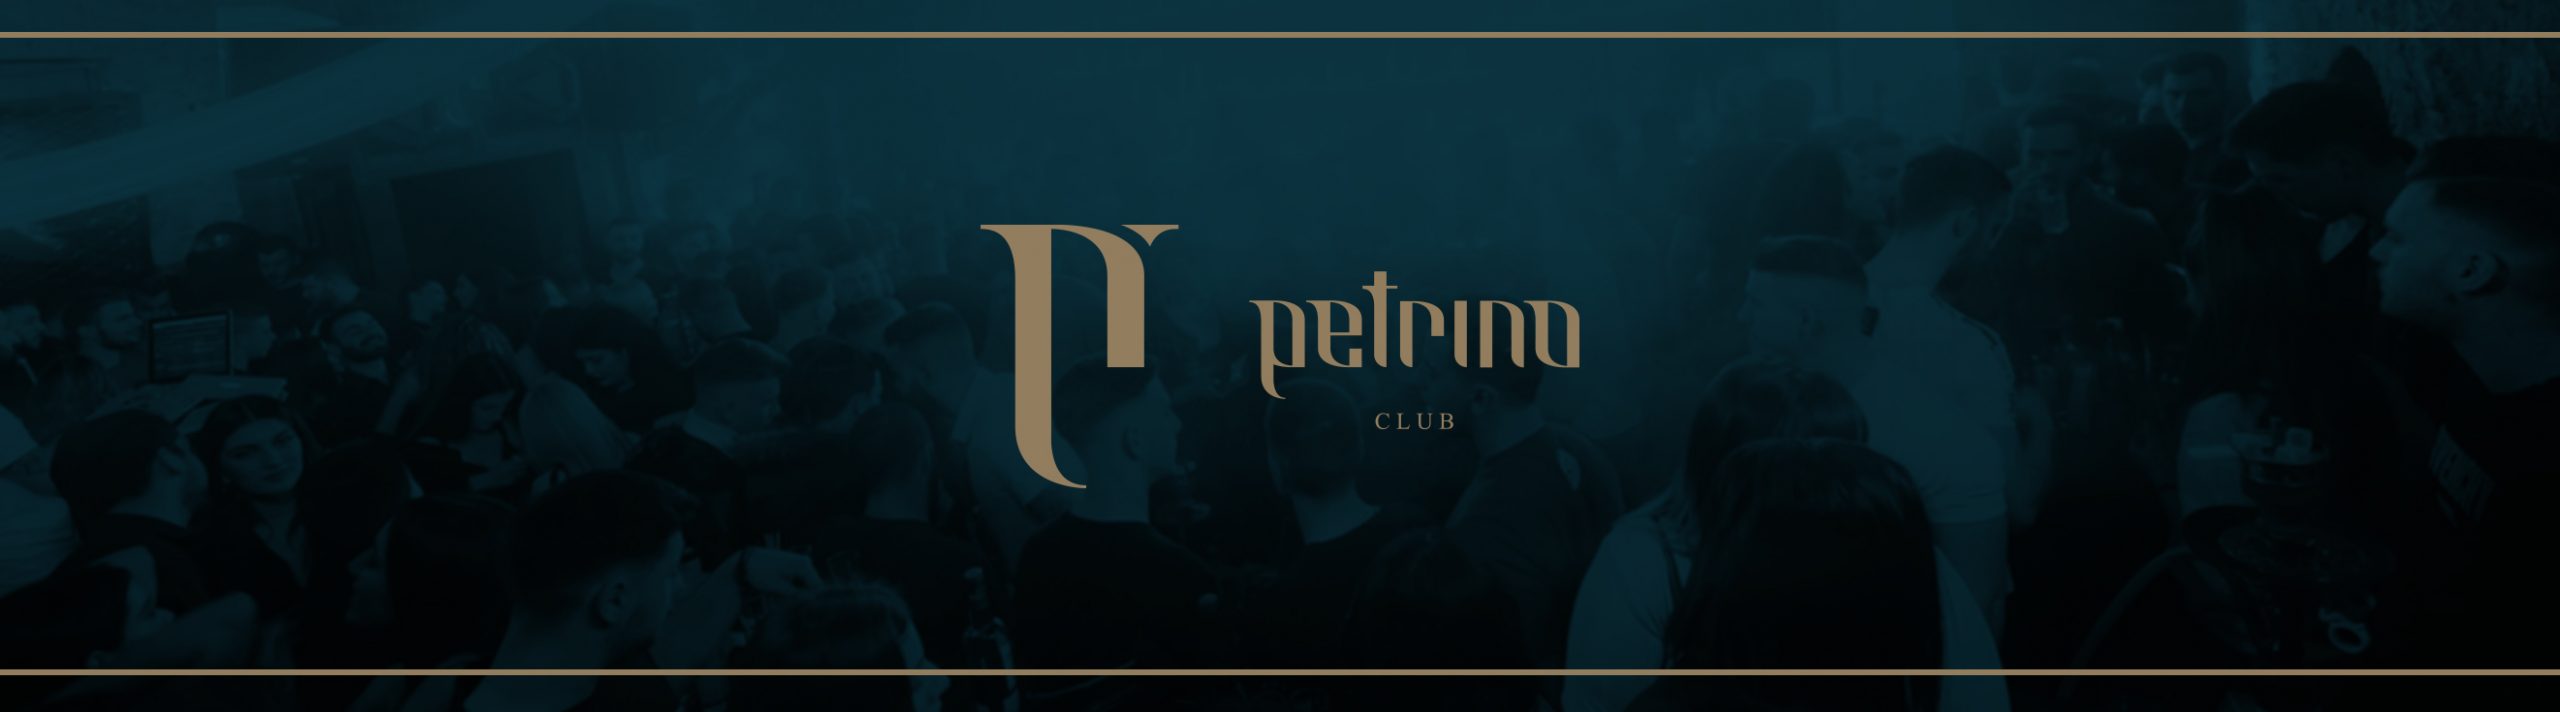 petrino 4 scaled - Petrino - The Design Boutique -petrino 4 scaled